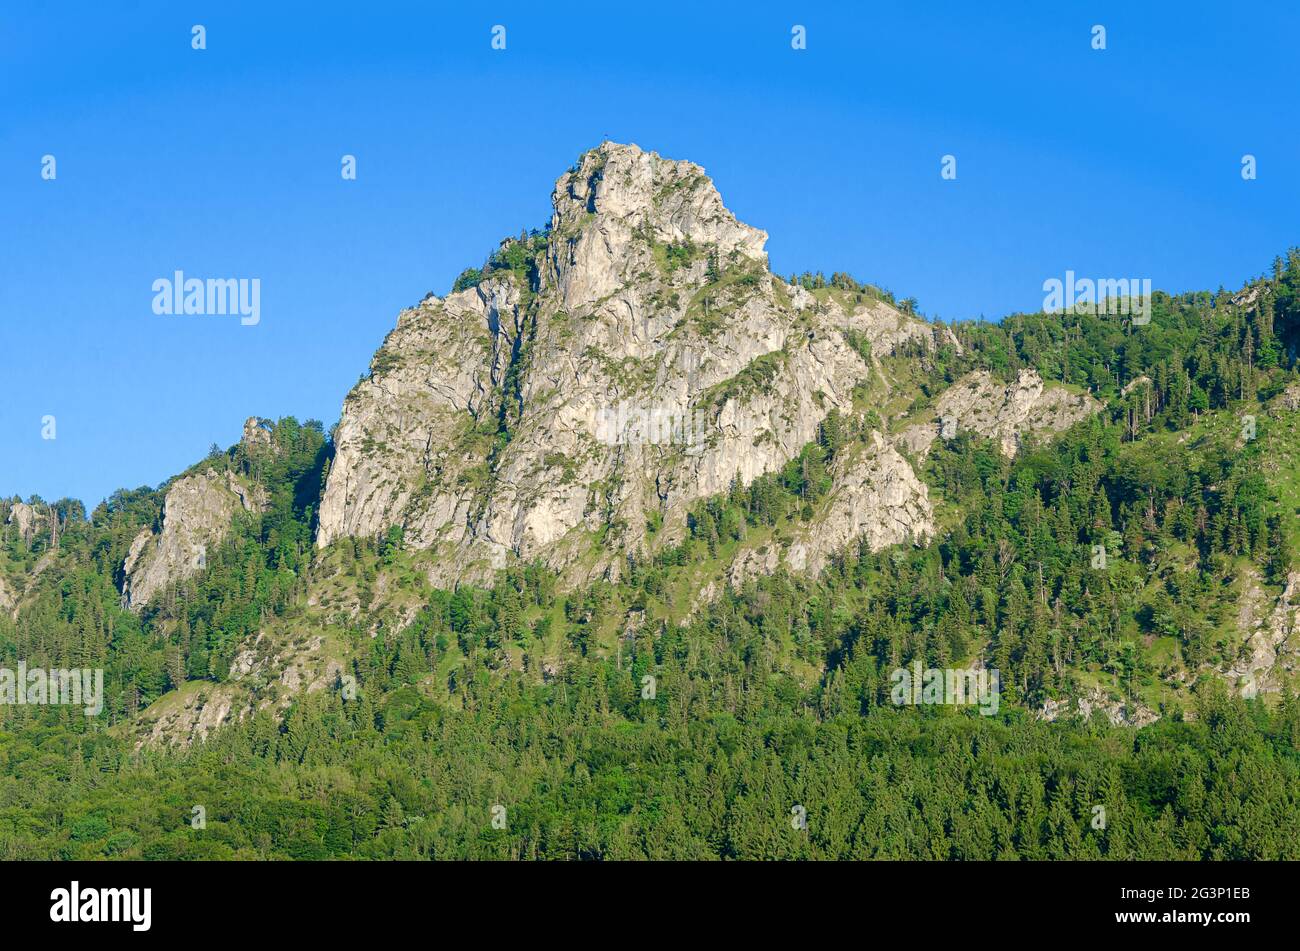 Nockstein, a jagged rock formation in Salzburg, Austria, Europe. Belongs to Gaisberg, Hausberg of Salzburg, the foothills of Northern Limestone Alps. Stock Photo